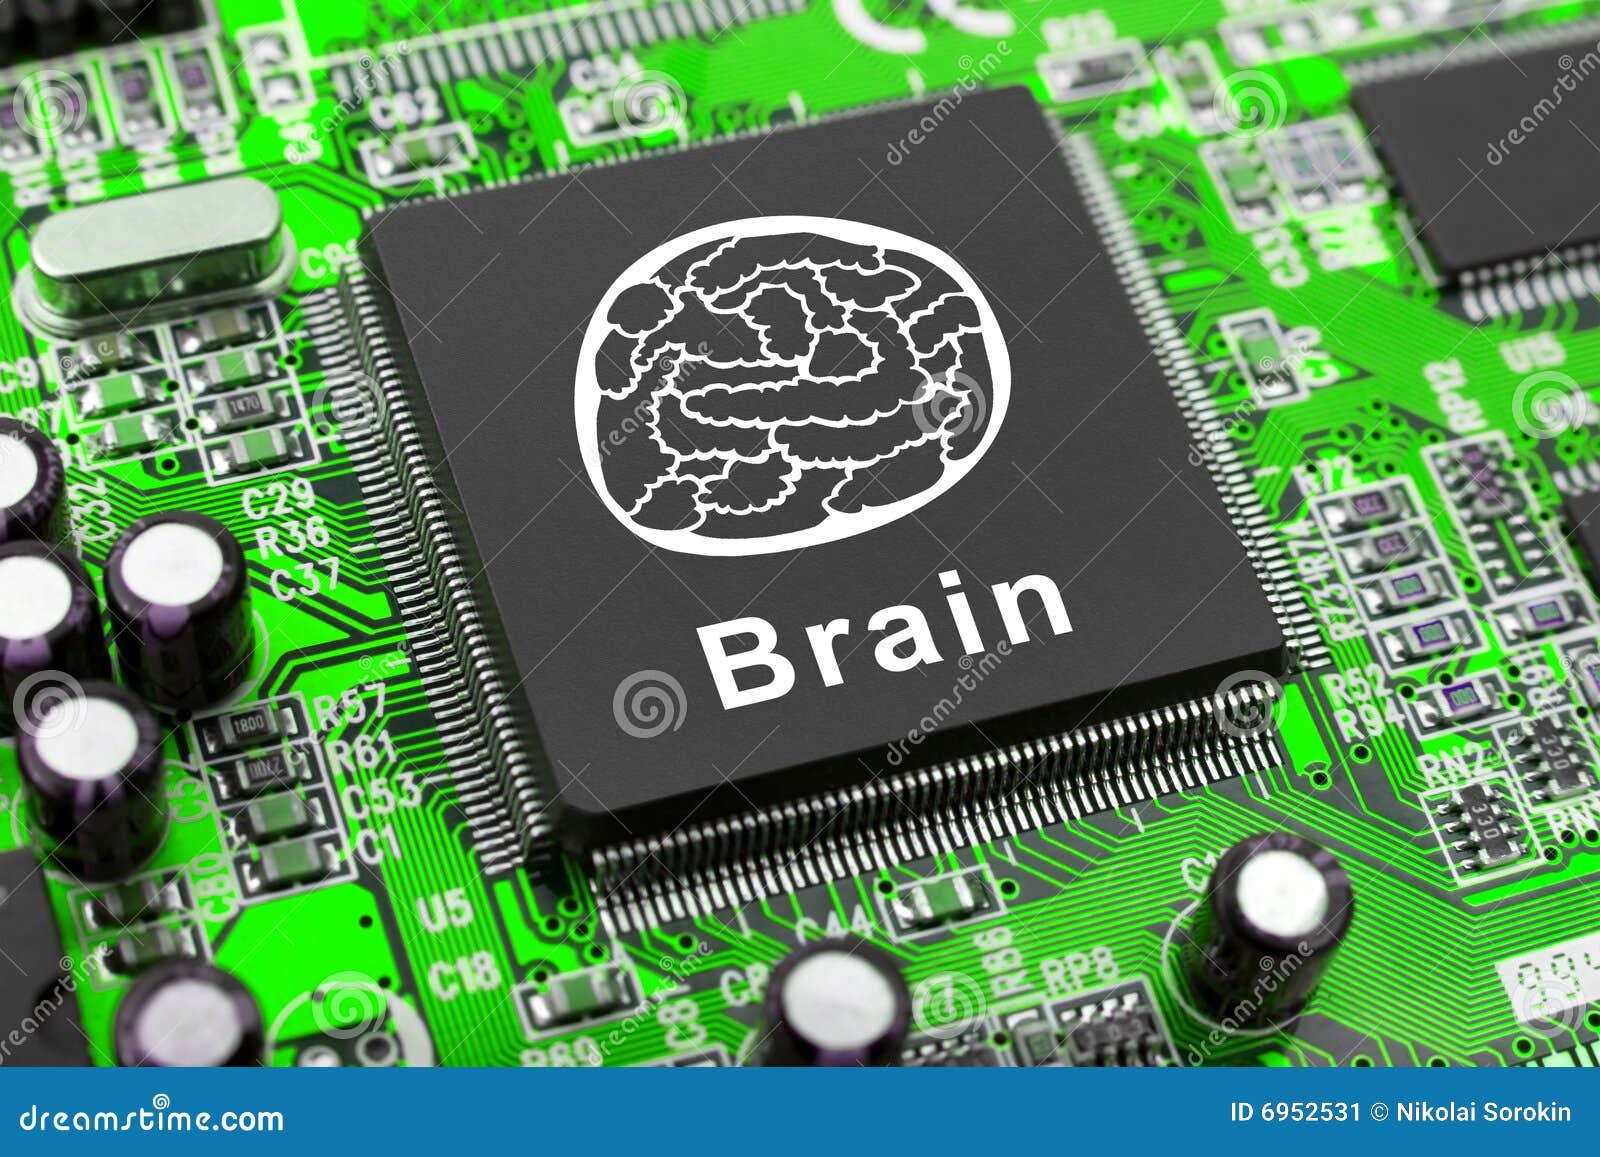 brain  on computer chip